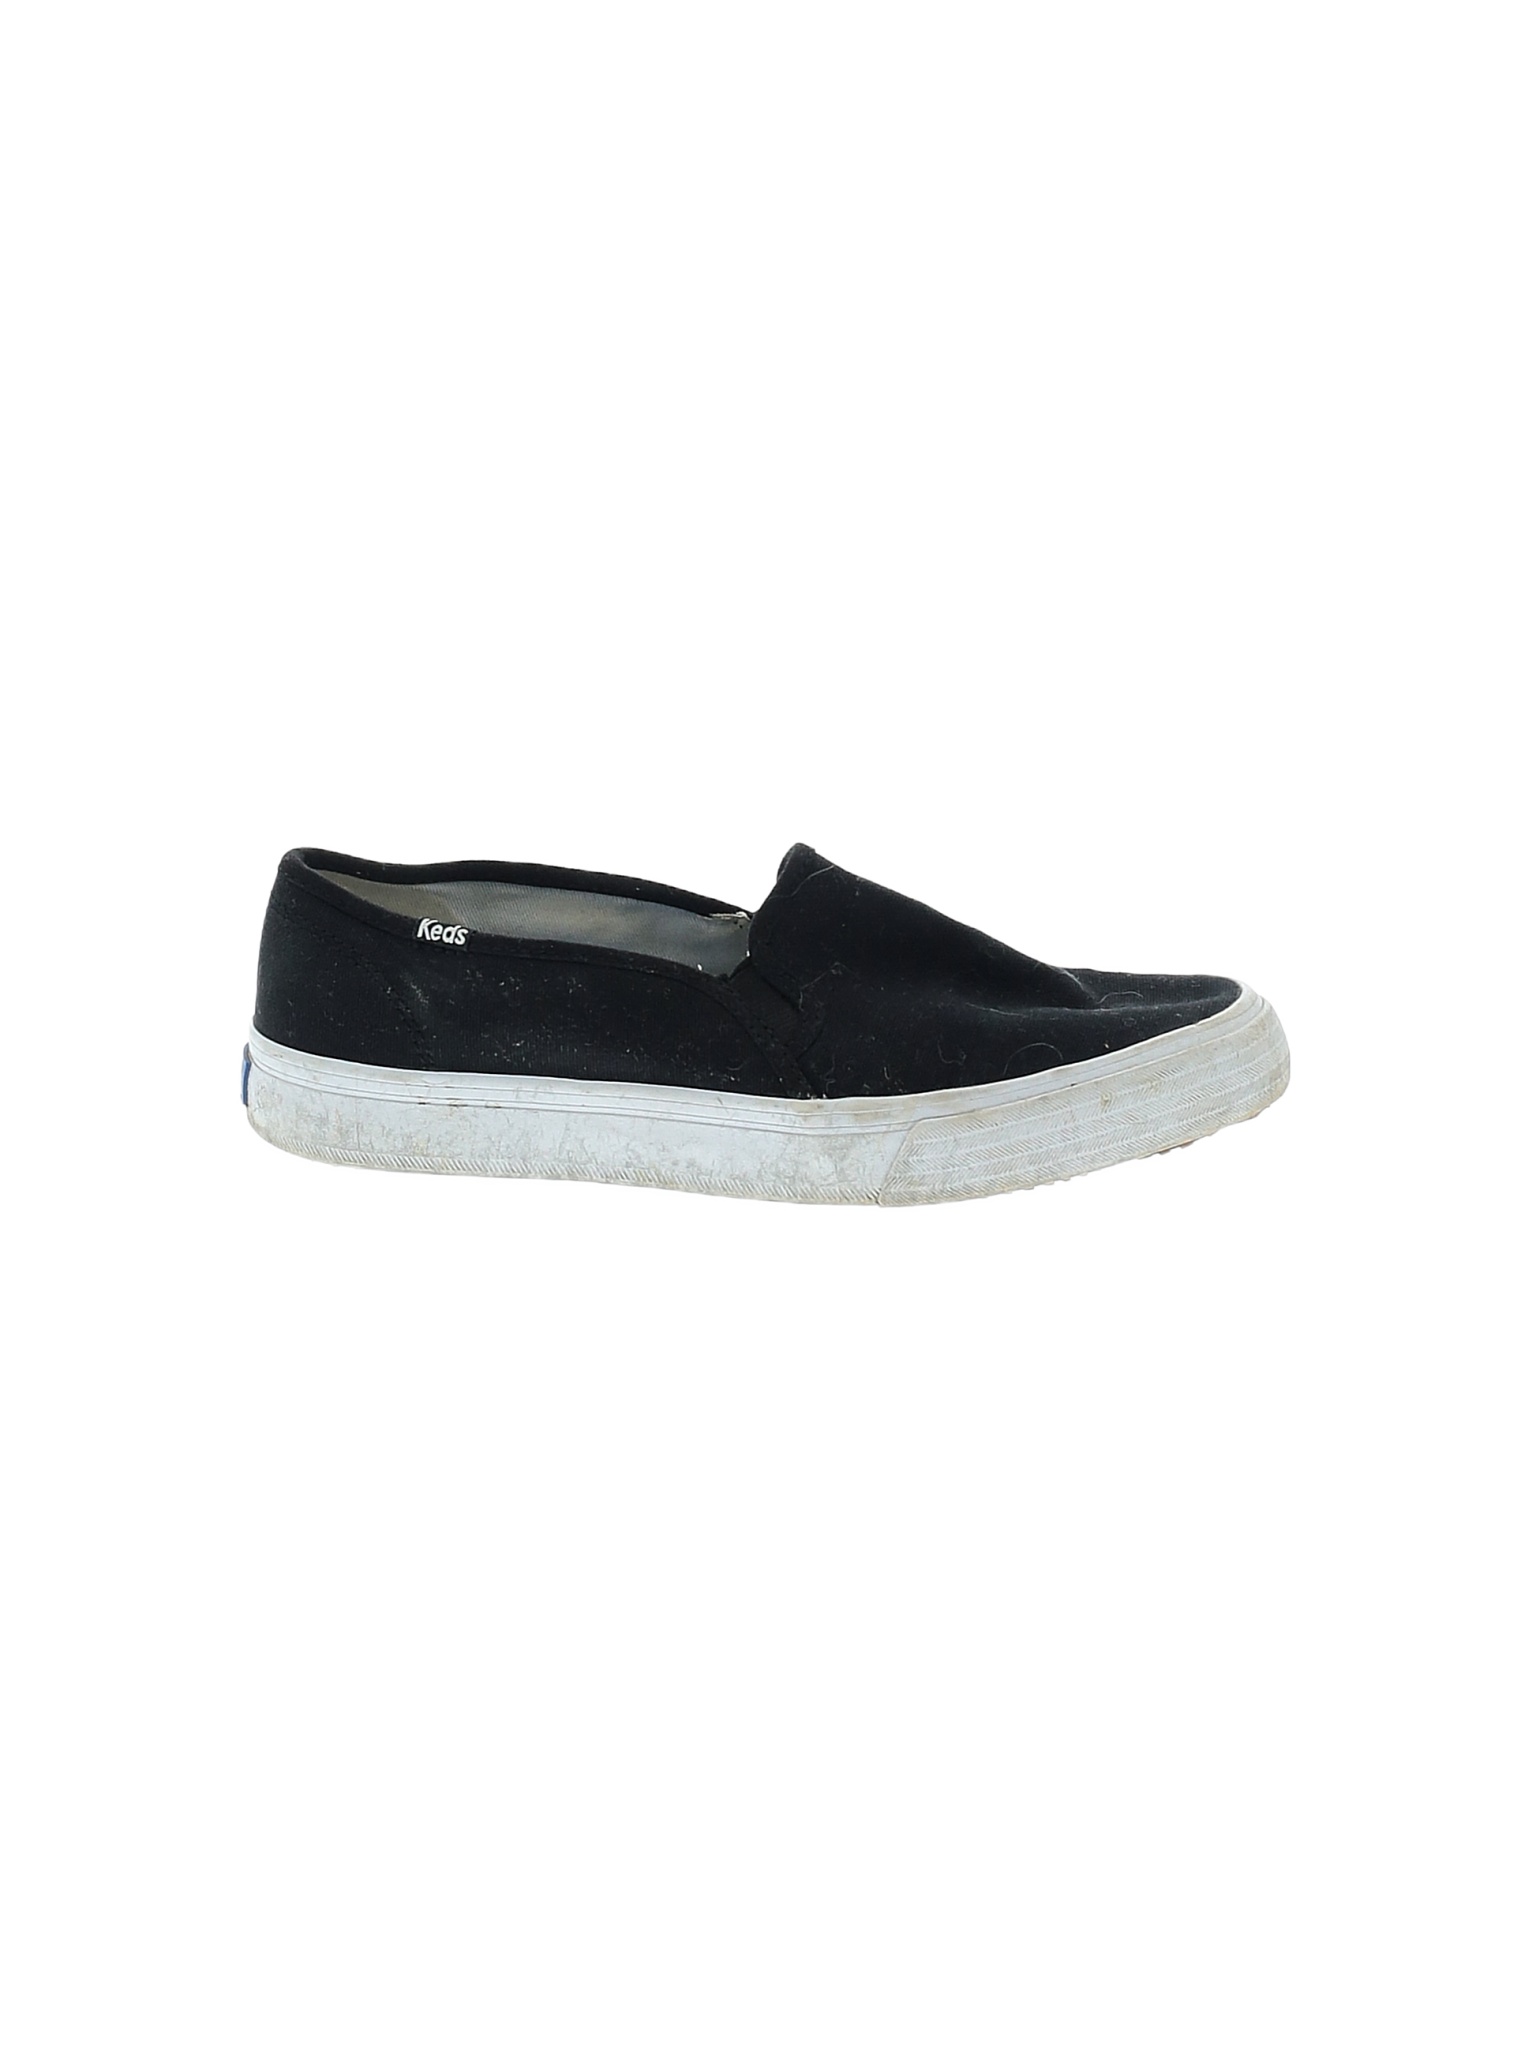 Keds Color Block Solid Black Sneakers Size 7 - 56% off | thredUP